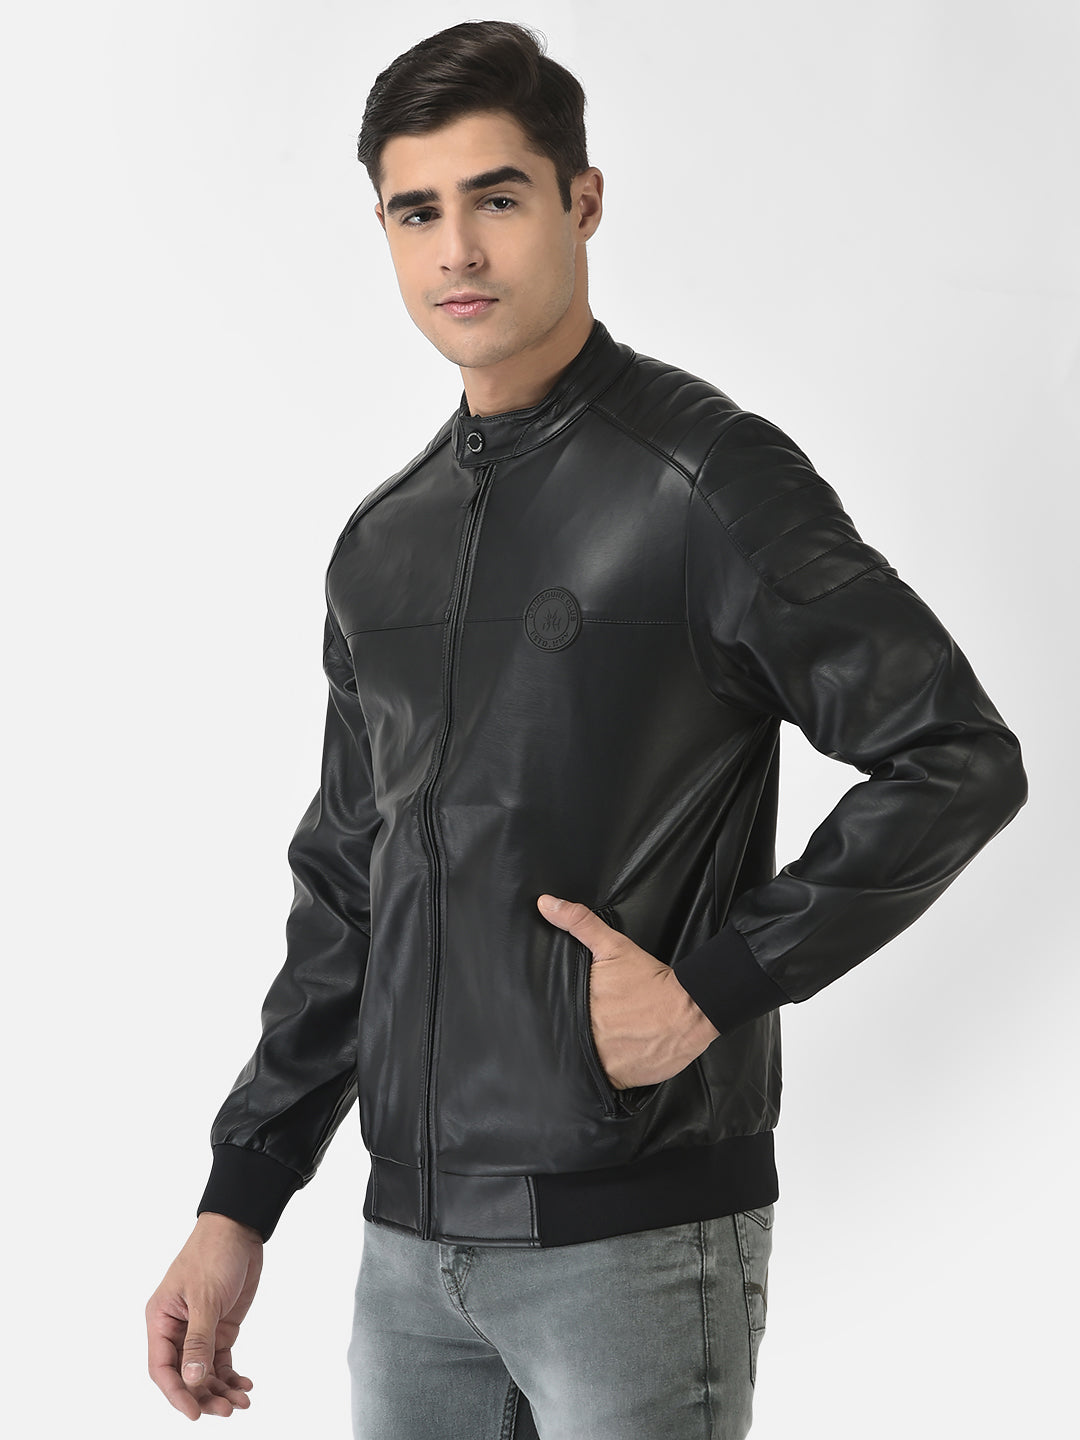  Black Leather Jacket with Logo Work 